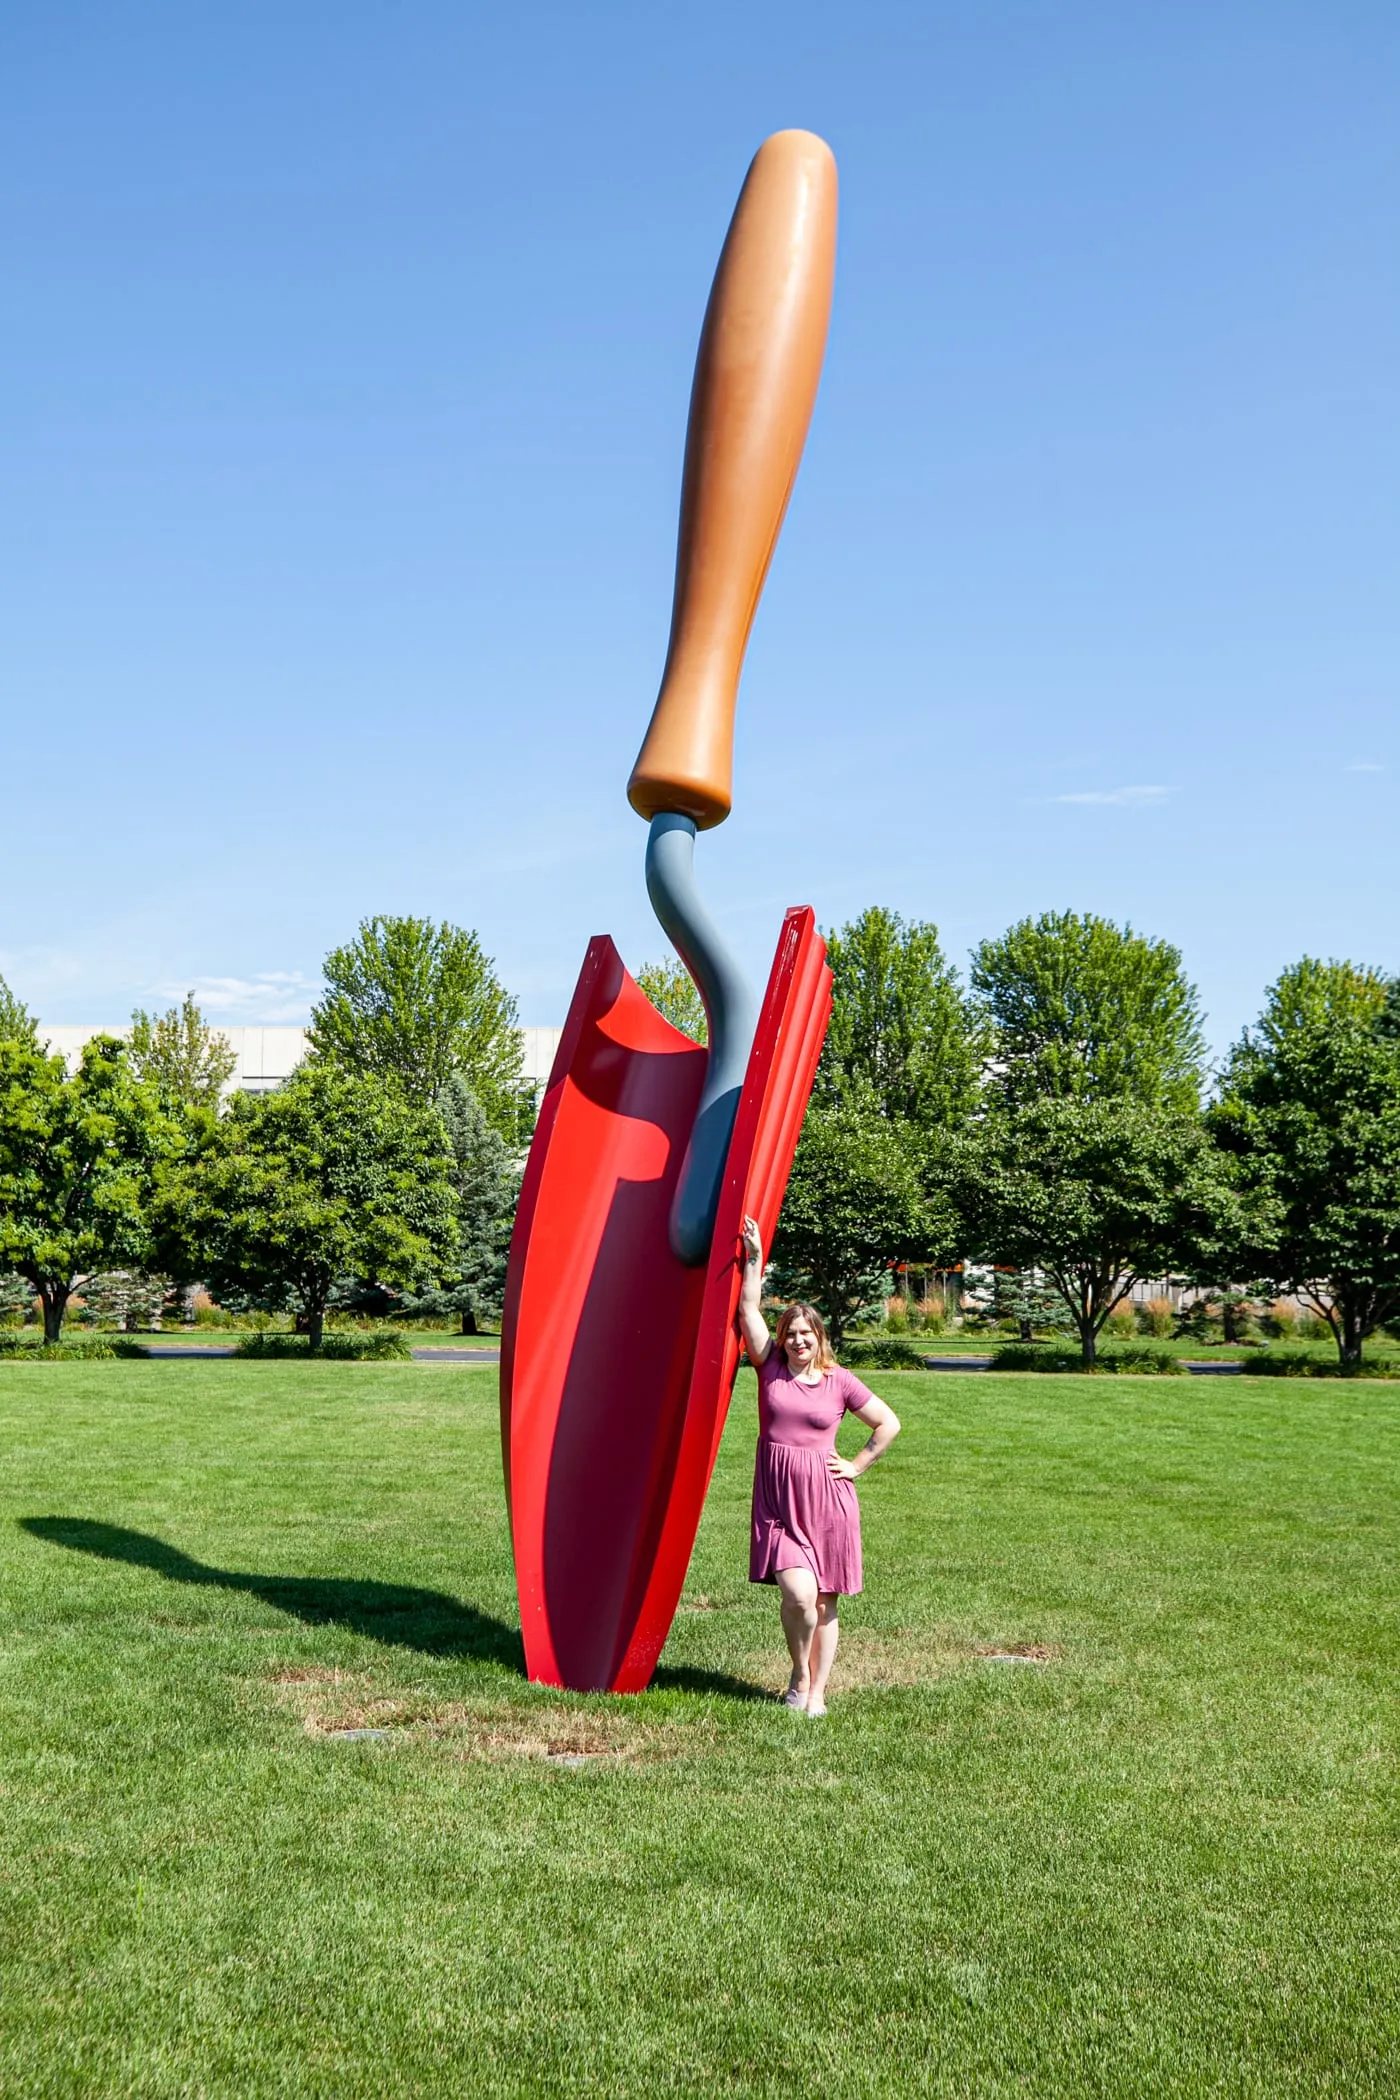 Plantoir Sculpture: Giant Garden Trowel in Des Moines, Iowa | Des Moines Public Art in Iowa roadside attractions